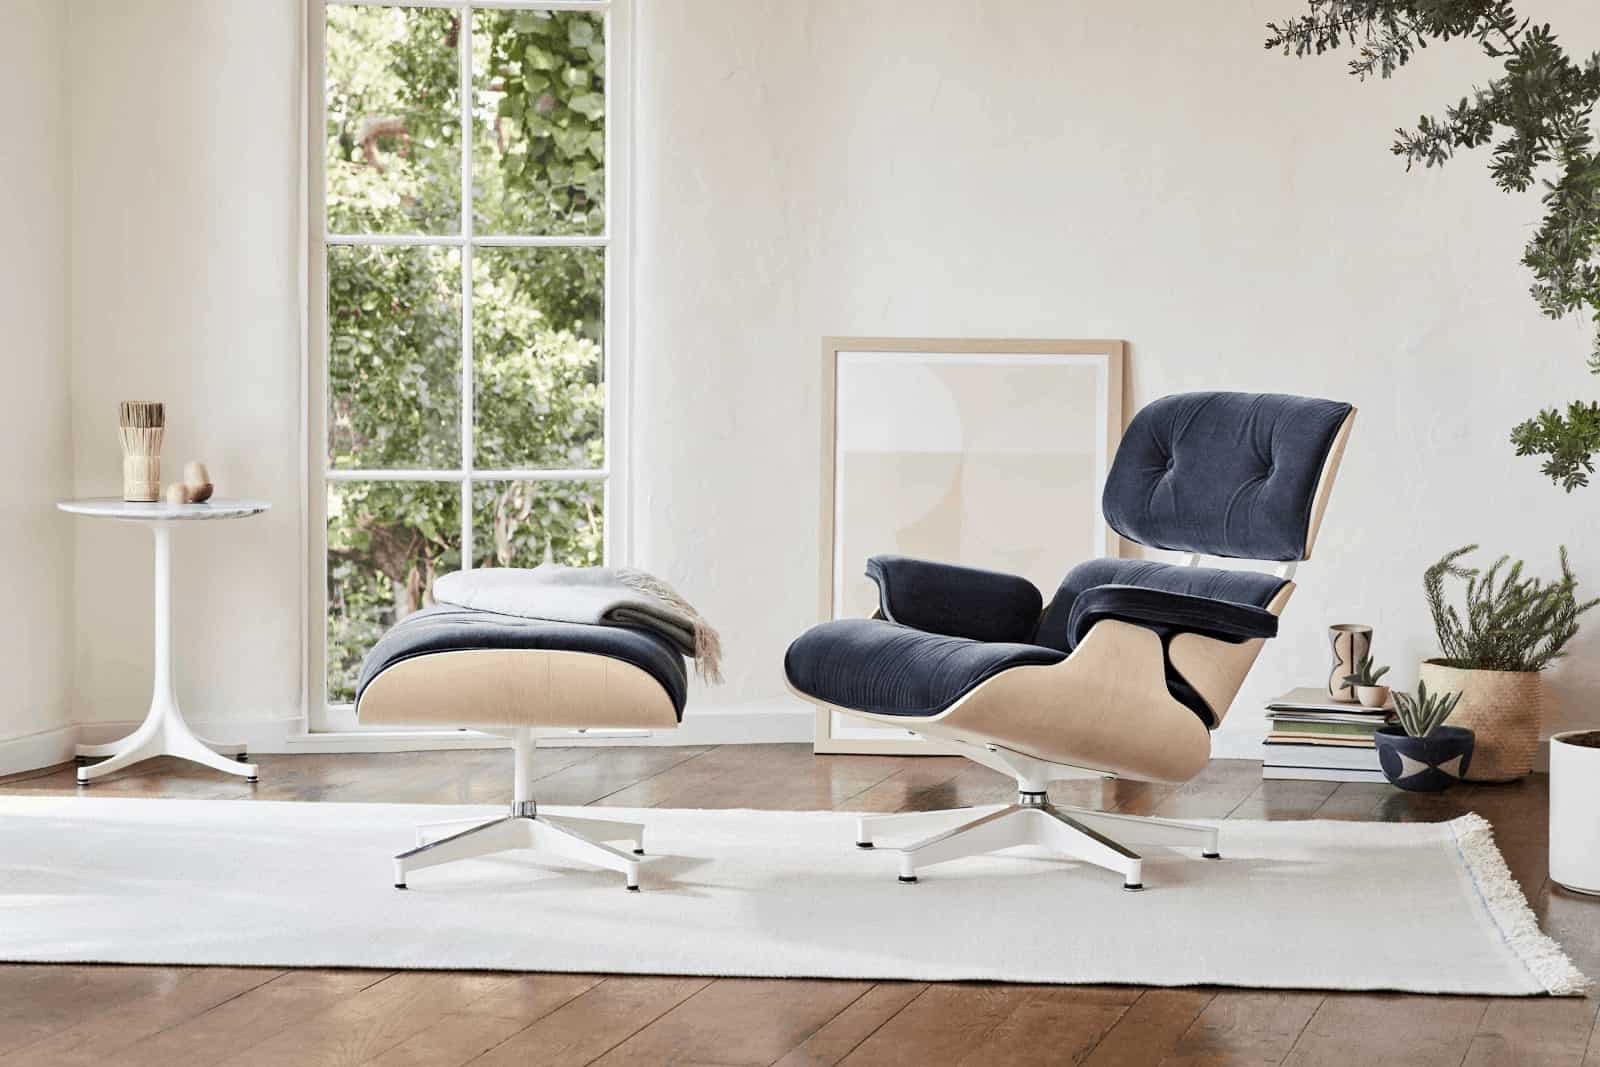 5 iconic chairs every interior needs  laura u